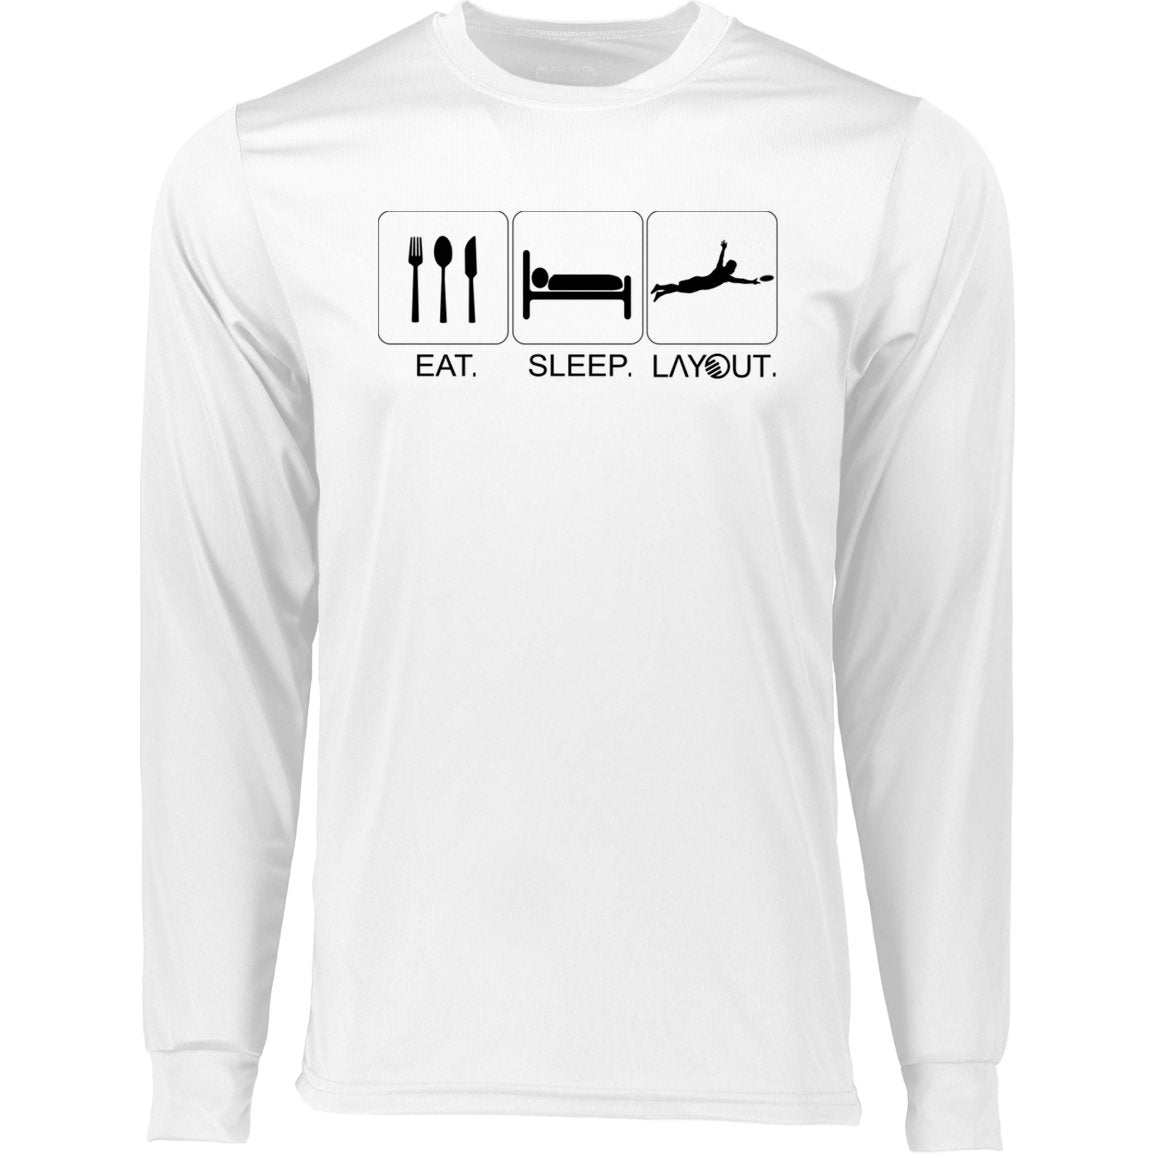 Eat, Sleep, Layout Long Sleeve Jersey - Layout Ultimate